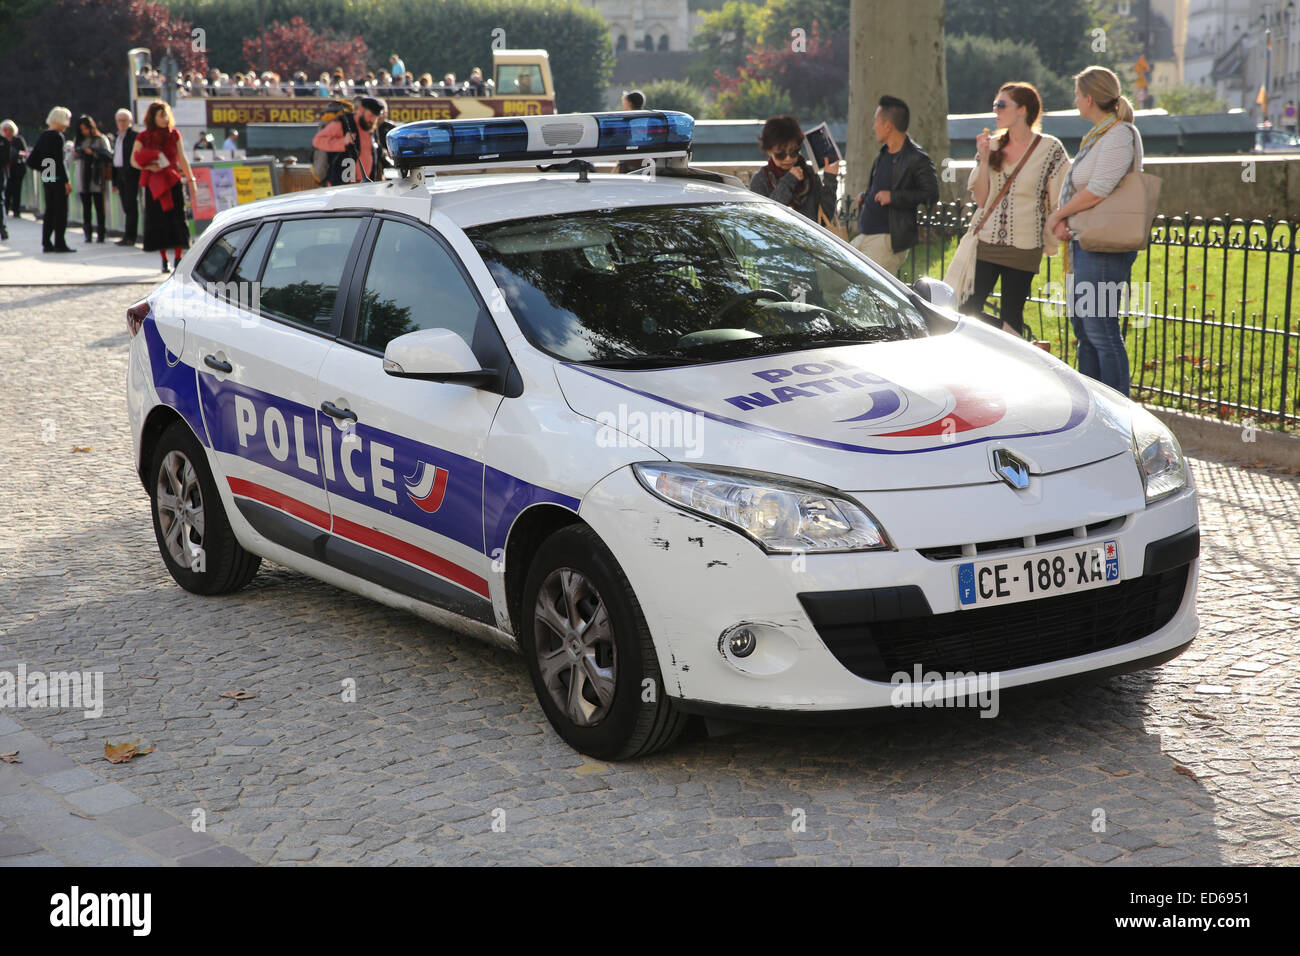 Paris police car cop vehicle Stock Photo